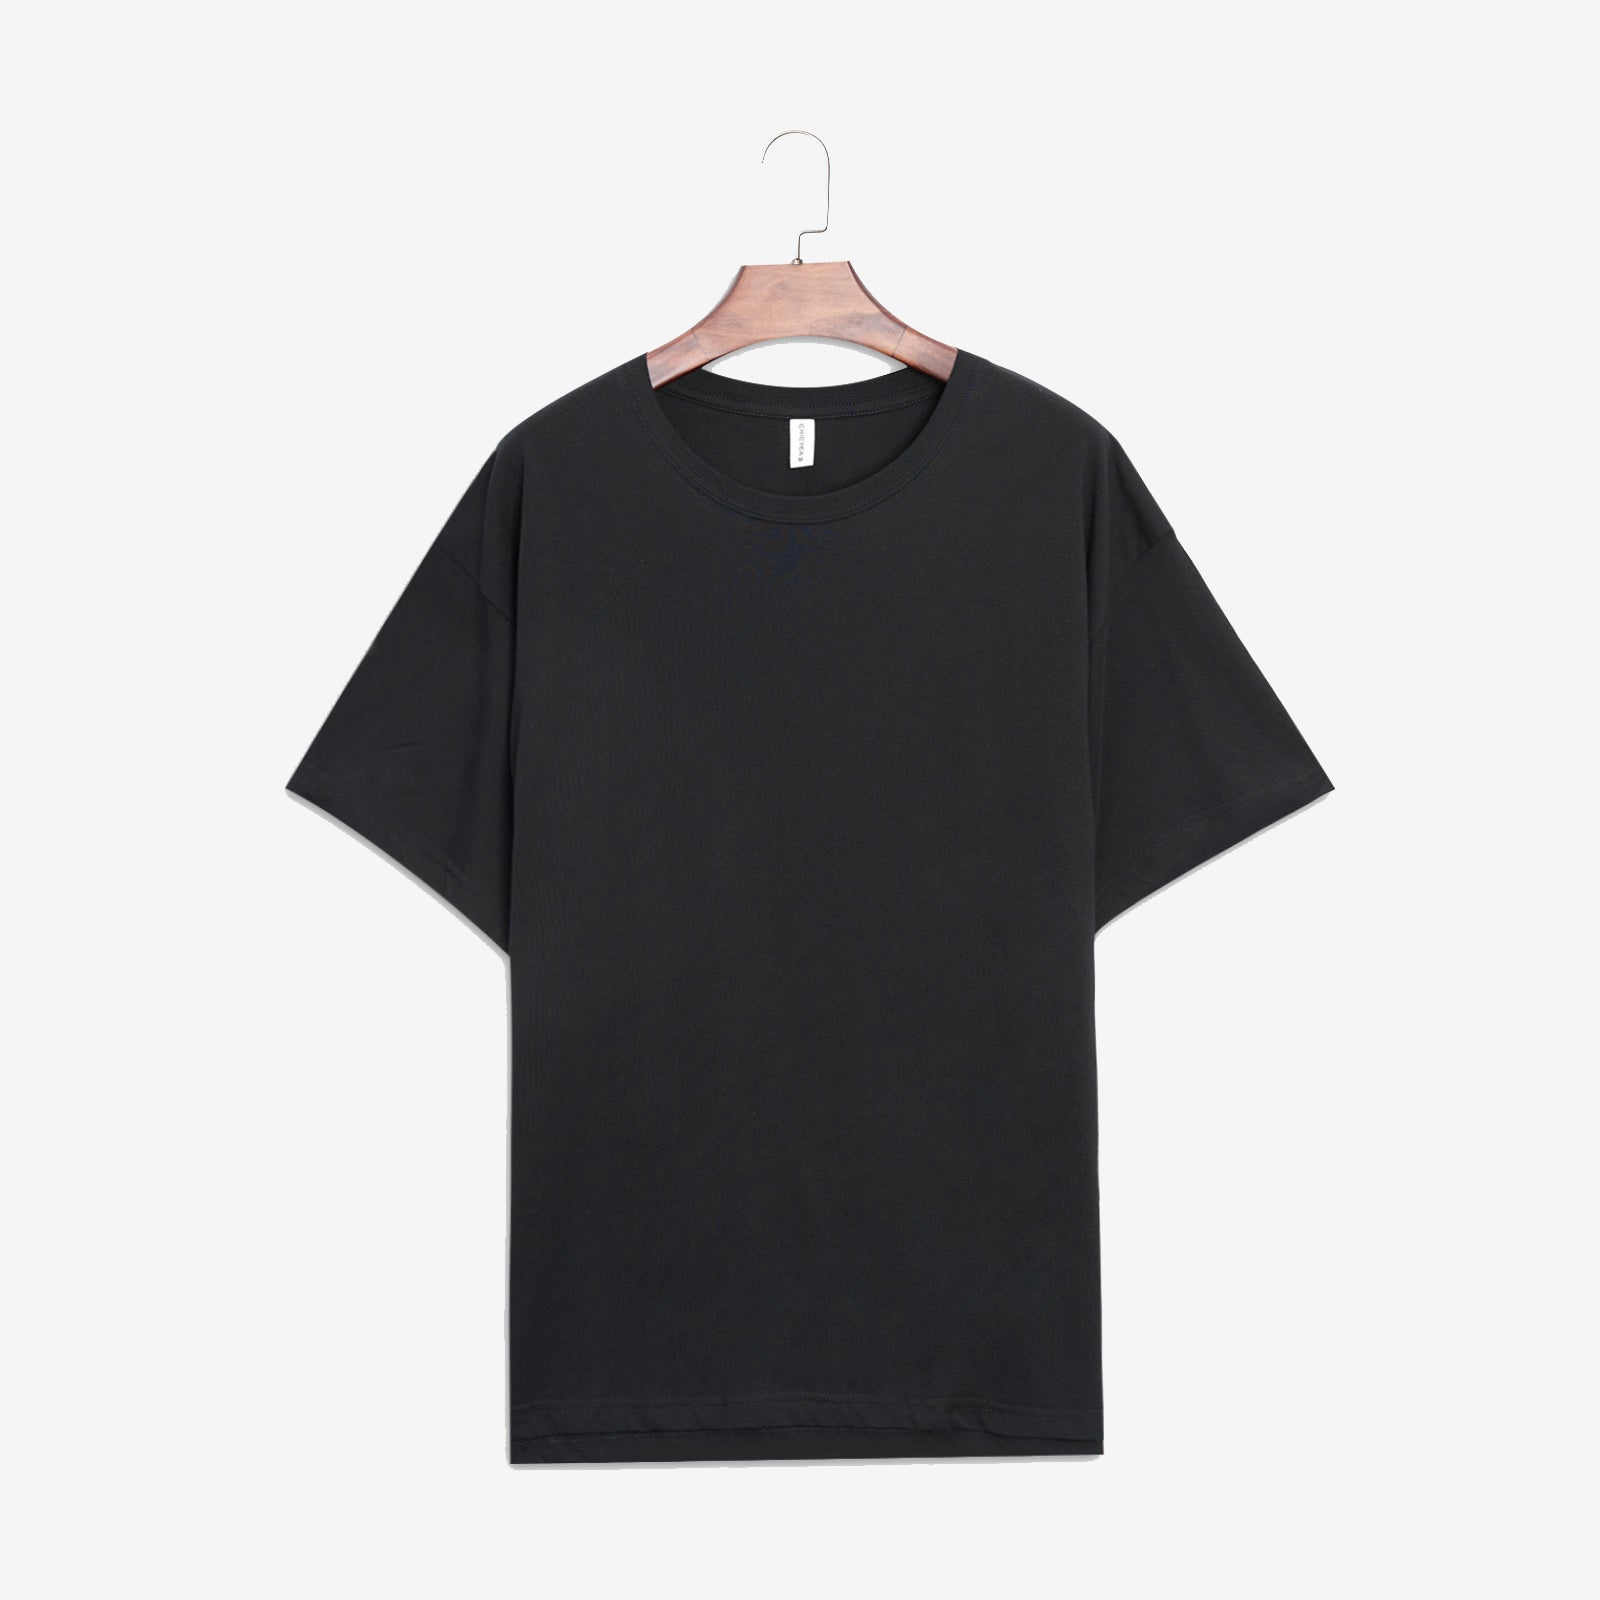 Minnieskull The More The Maryer Print Black T-Shirt